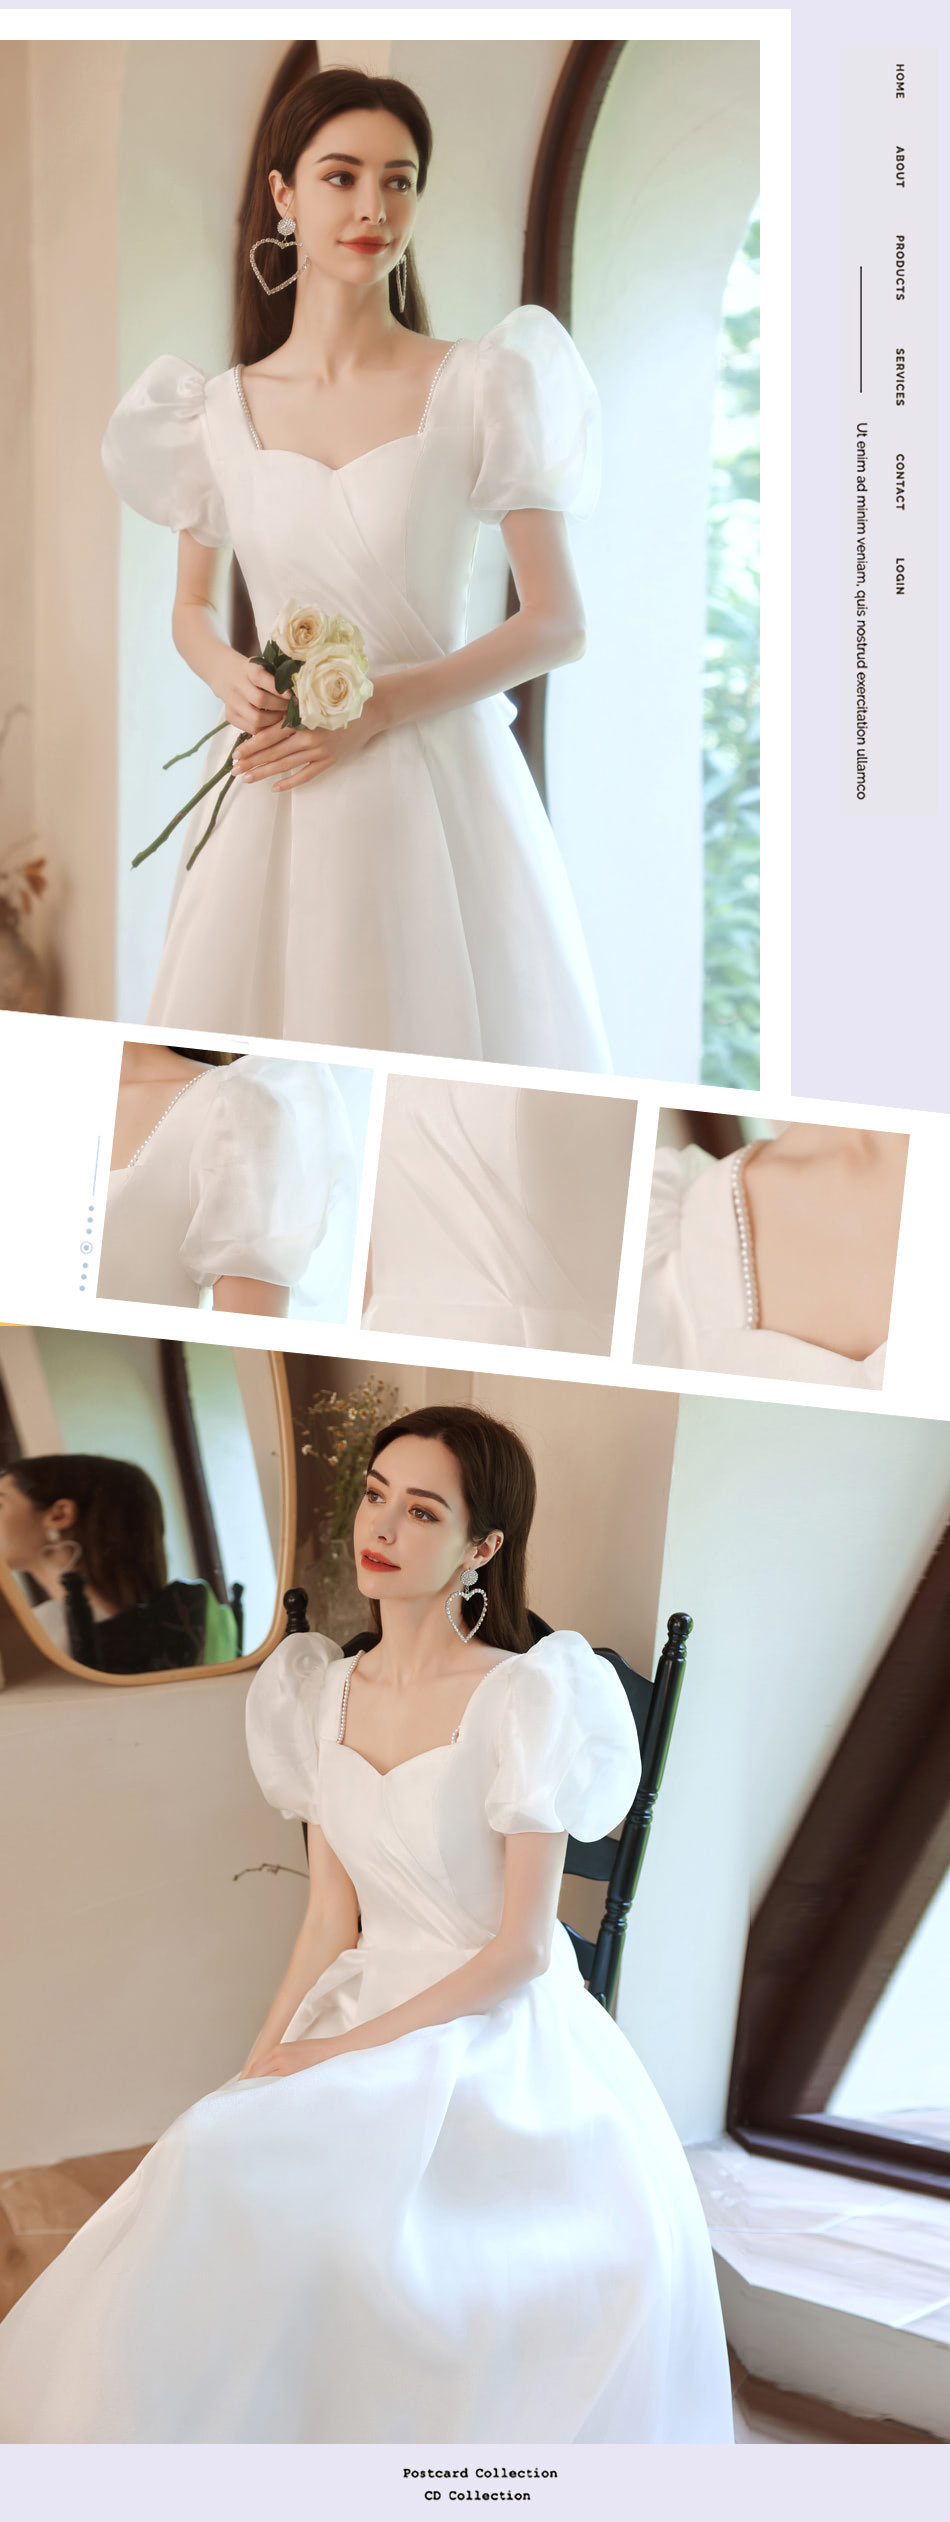 White-Short-Puff-Sleeve-Prom-Formal-Ball-Gown-Evening-Dress11.jpg